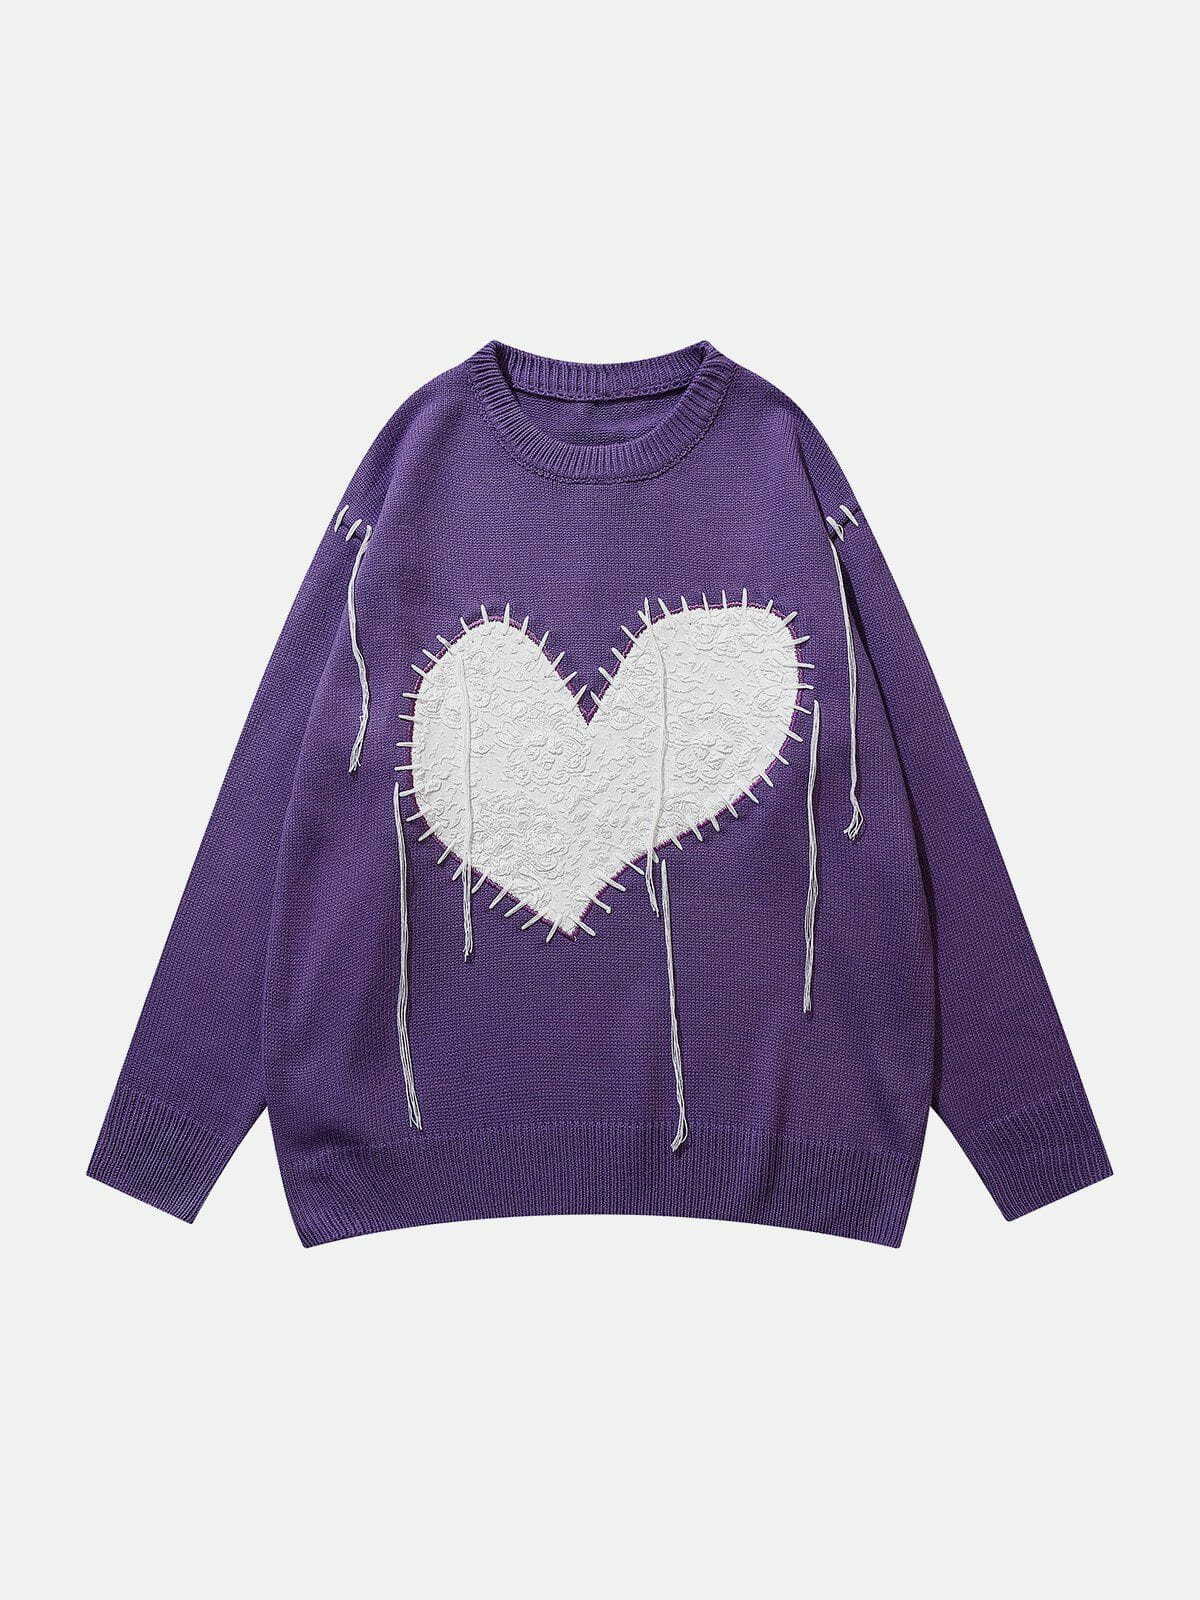 heartfelt patch love sweater y2k fashion statement 3341